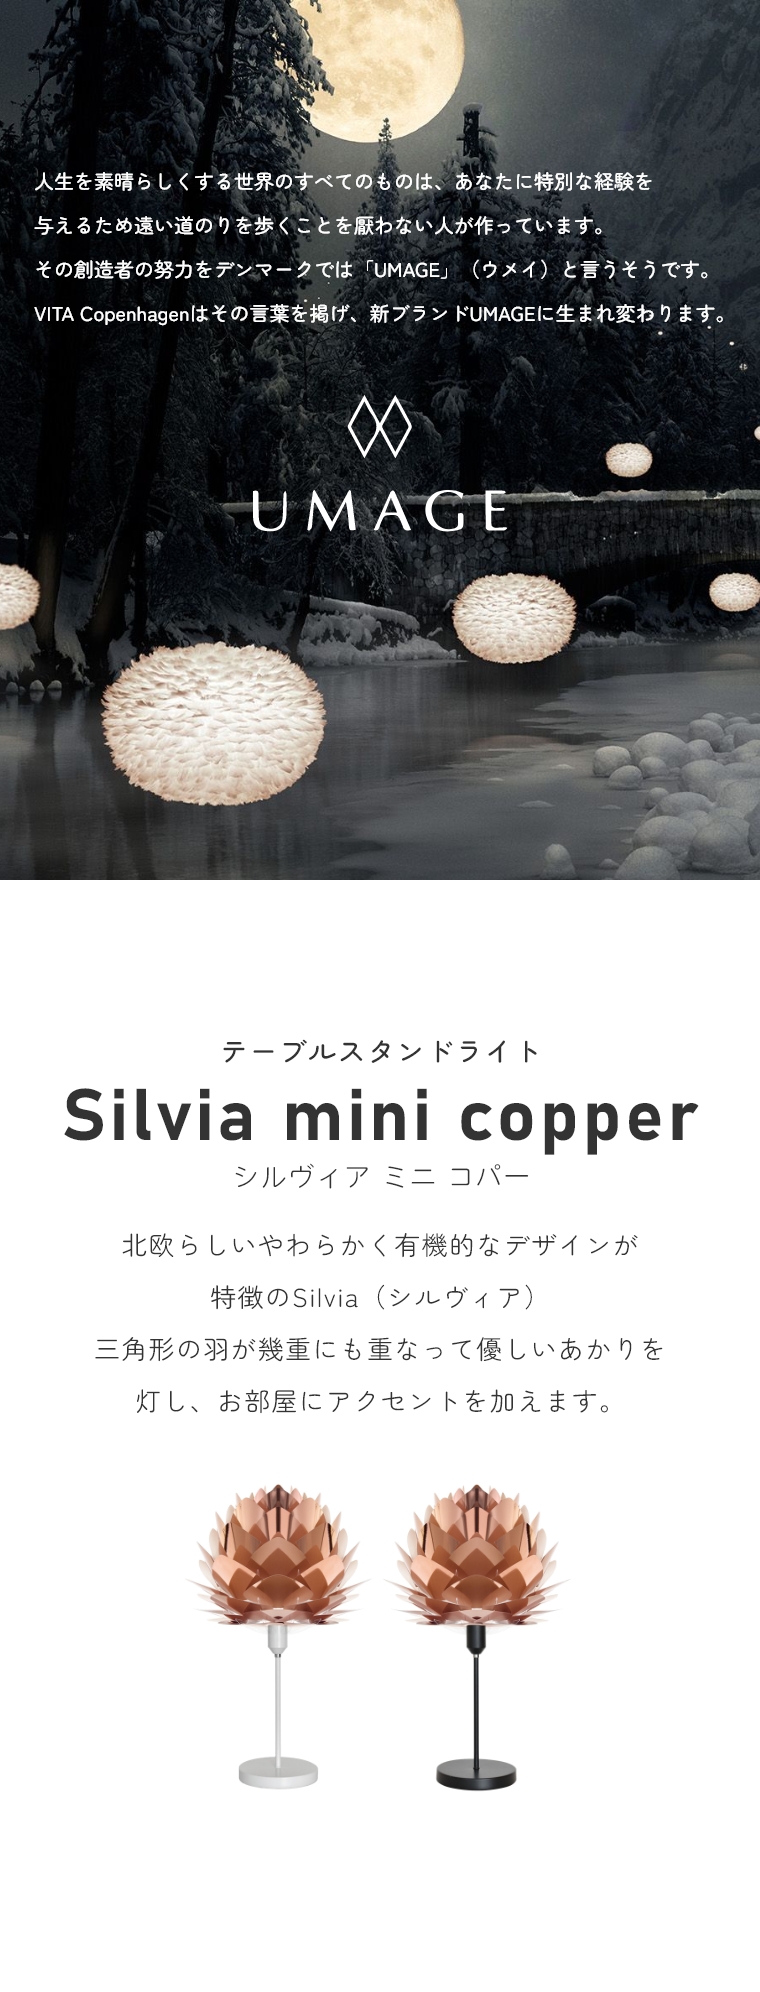 keCXg̃VvȃCg UMAGE(EC) Silvia mini copper (VBA ~j Rp[) e[uX^hCg 2030 GbNX